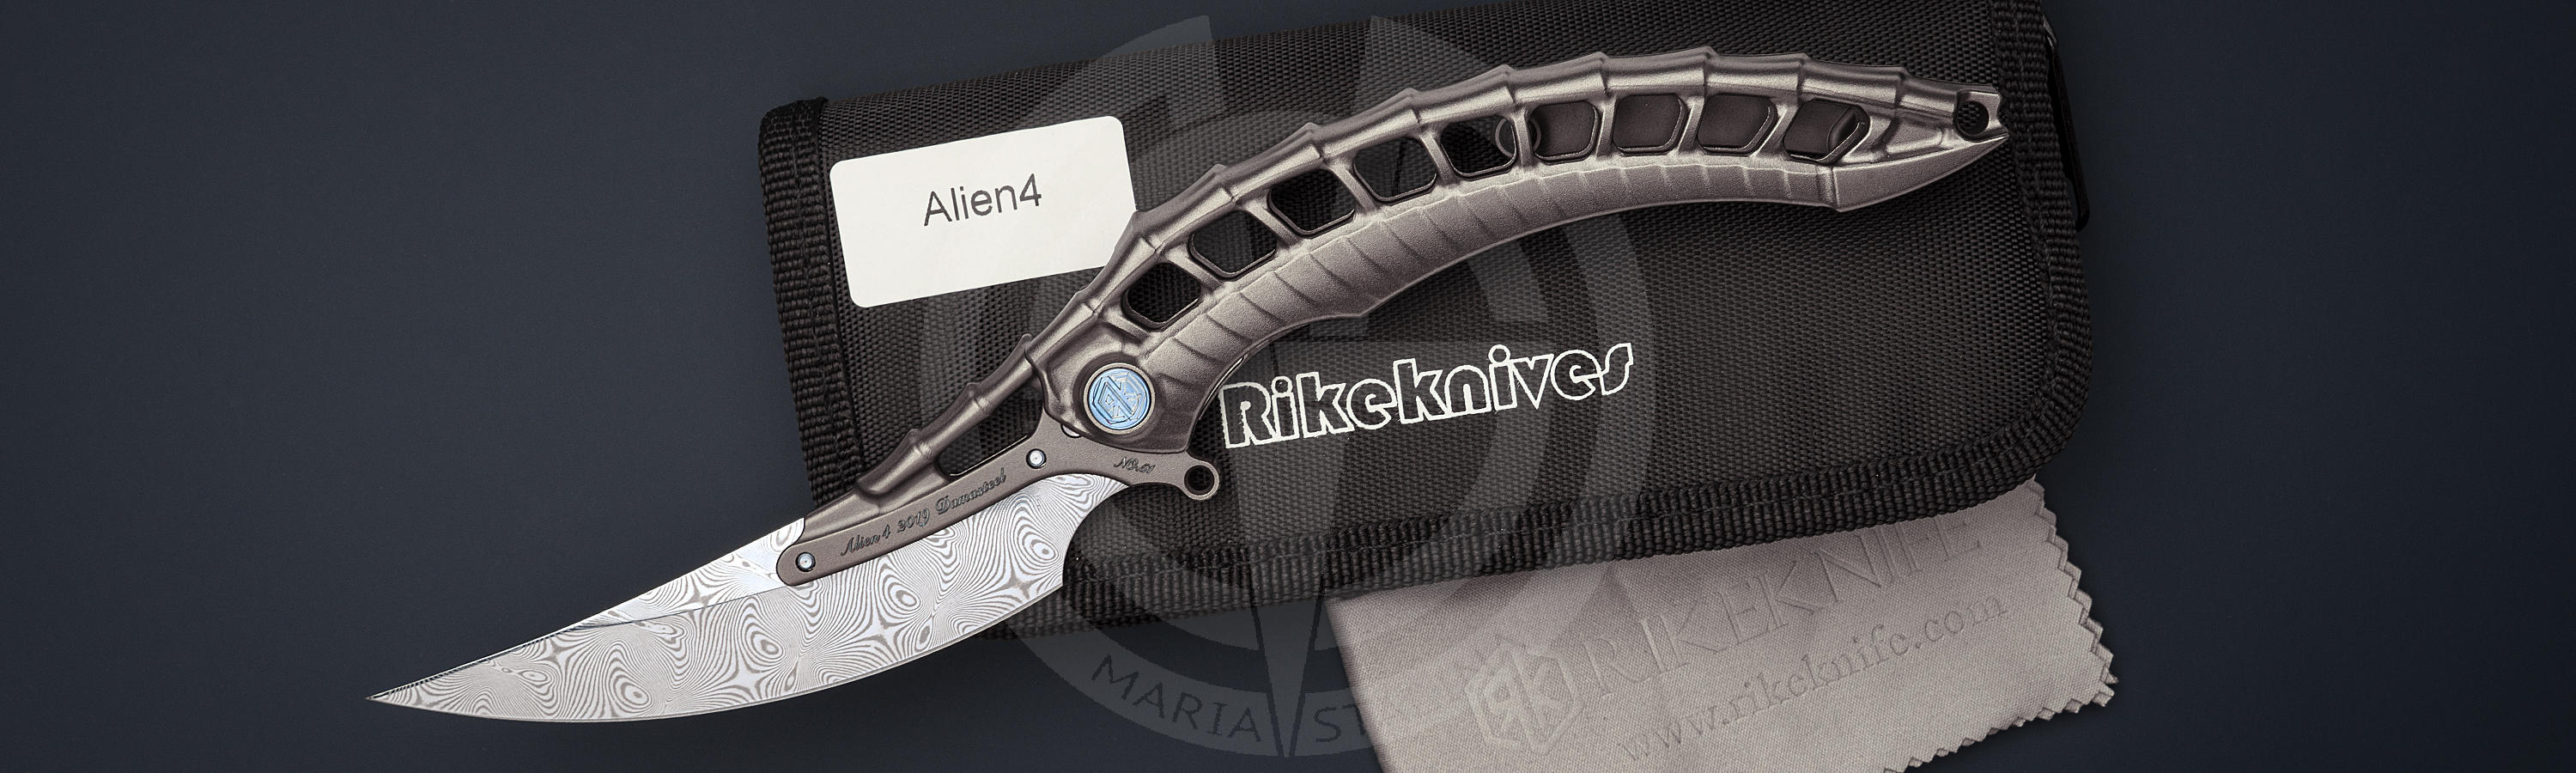 Rike Knife Alien 4 c чехлом